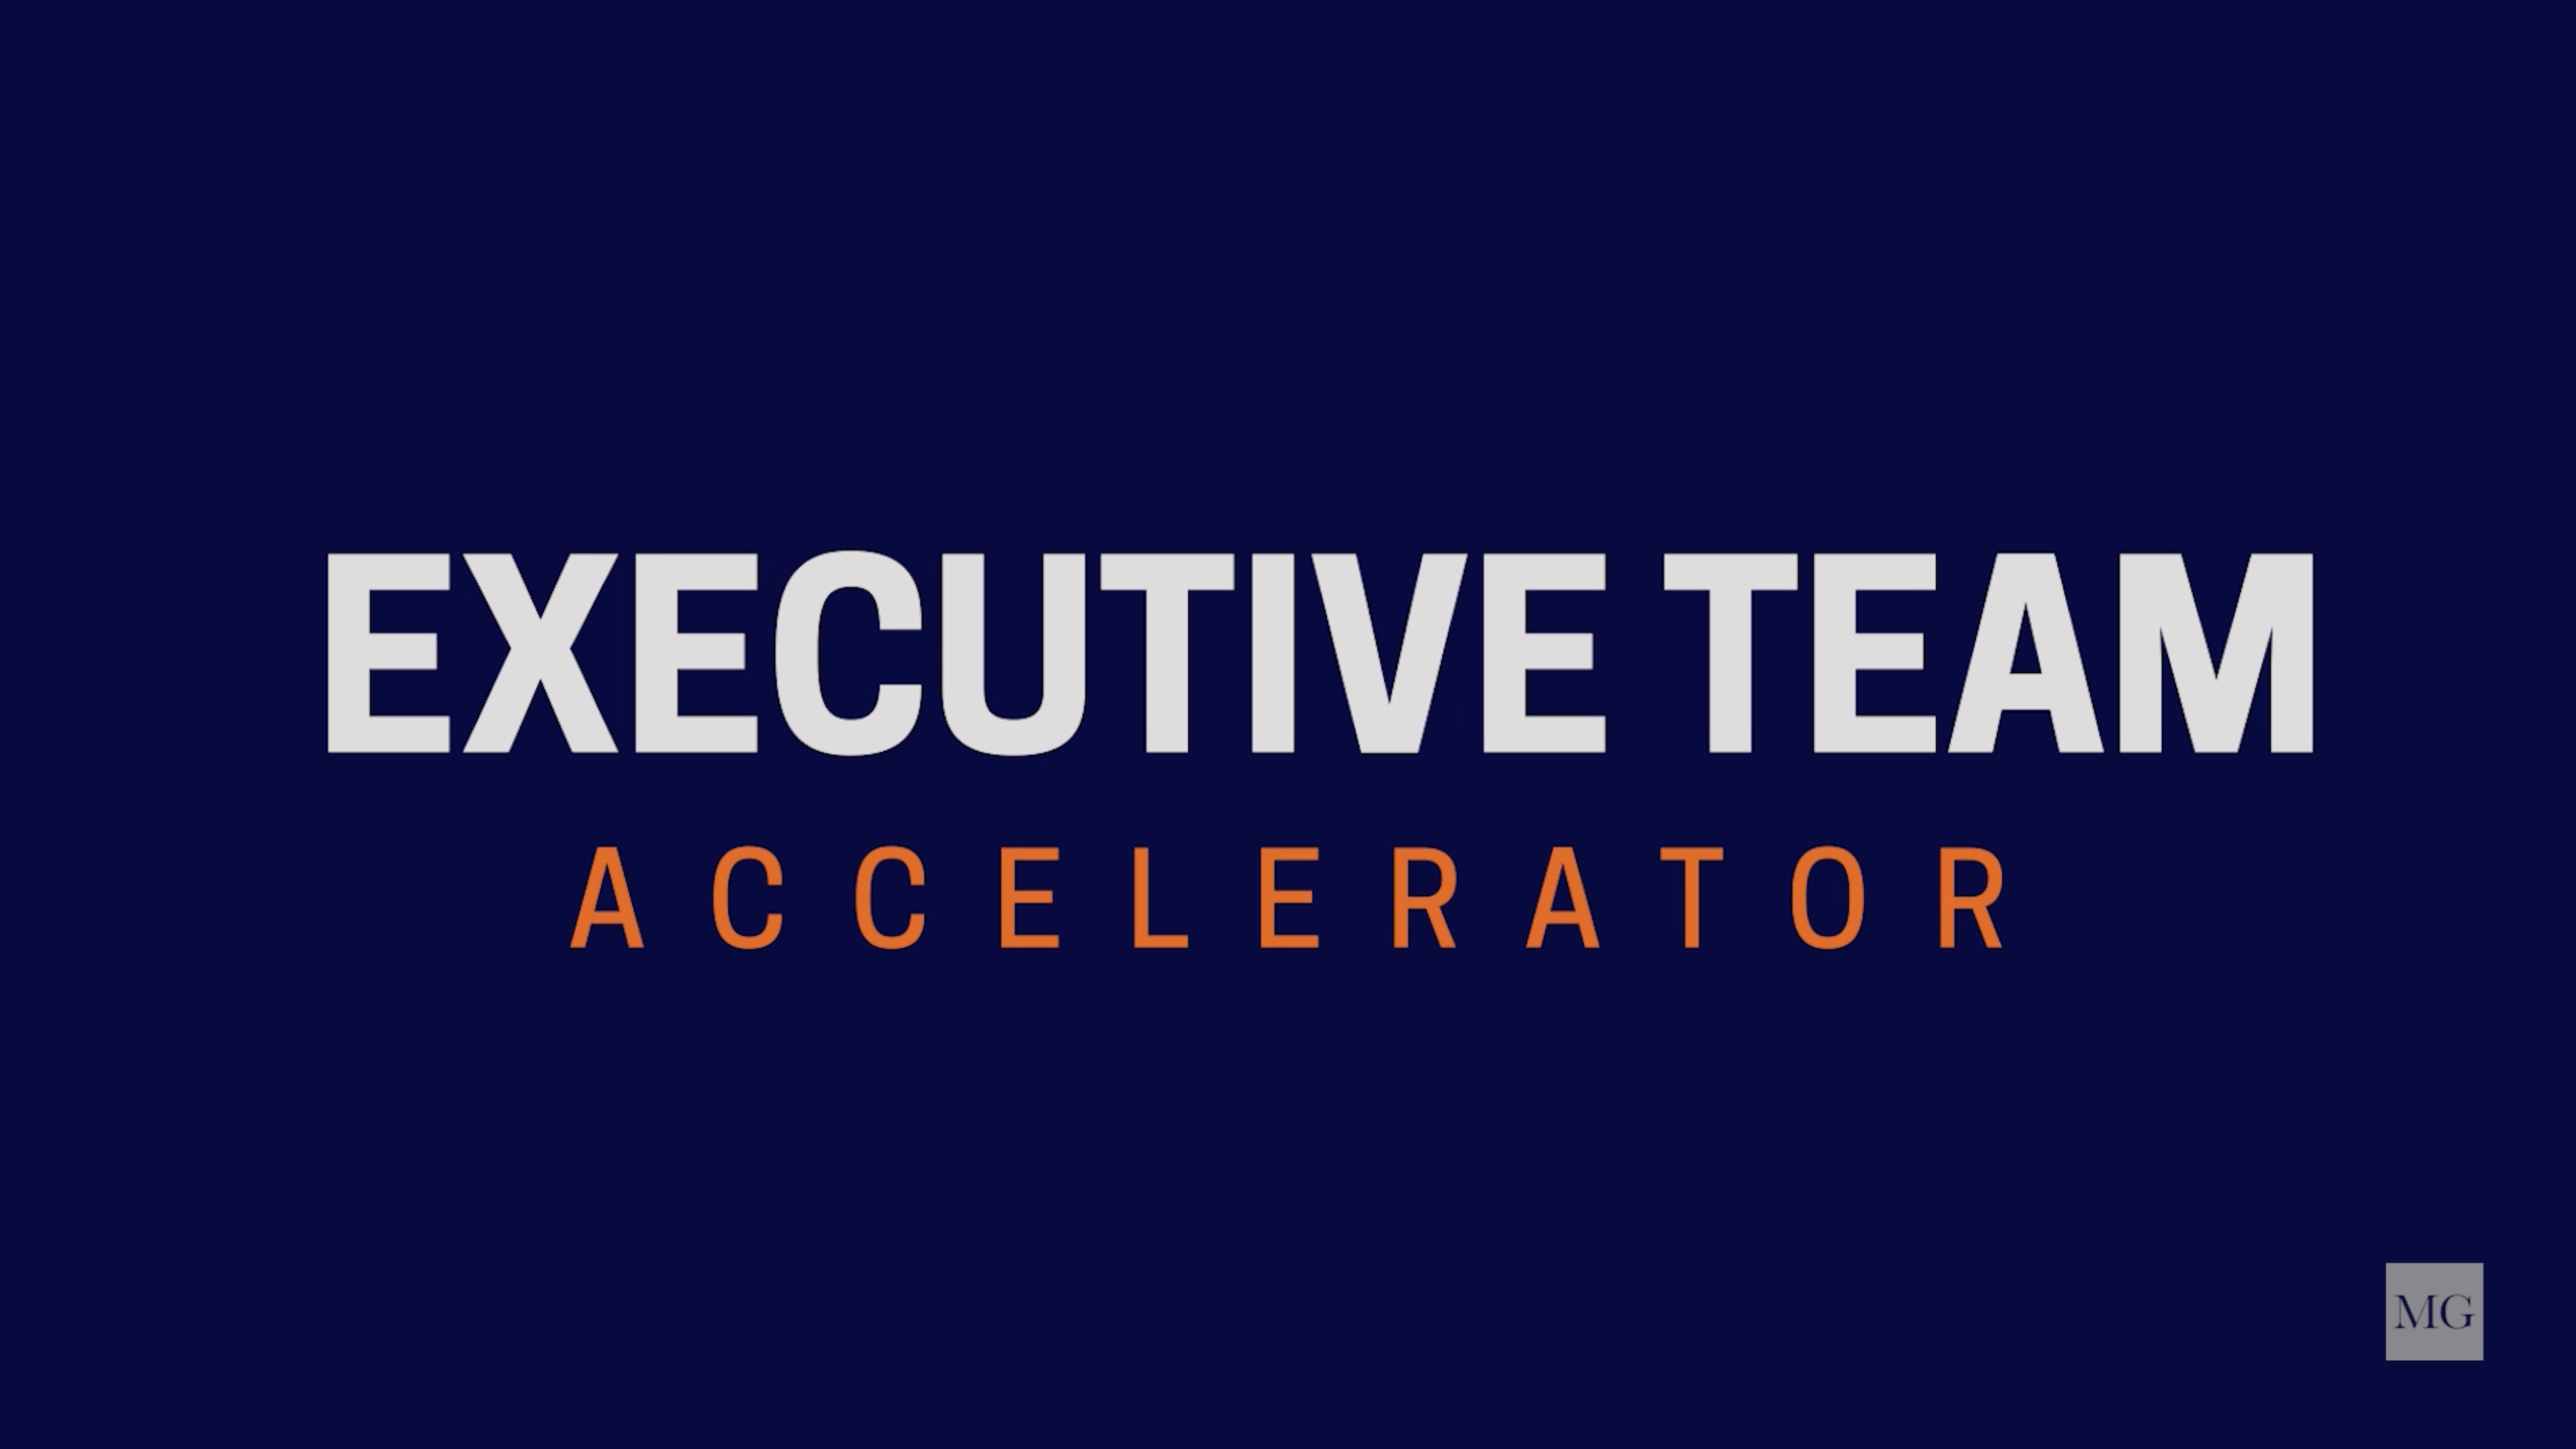 Executive Team Accelerator Overview